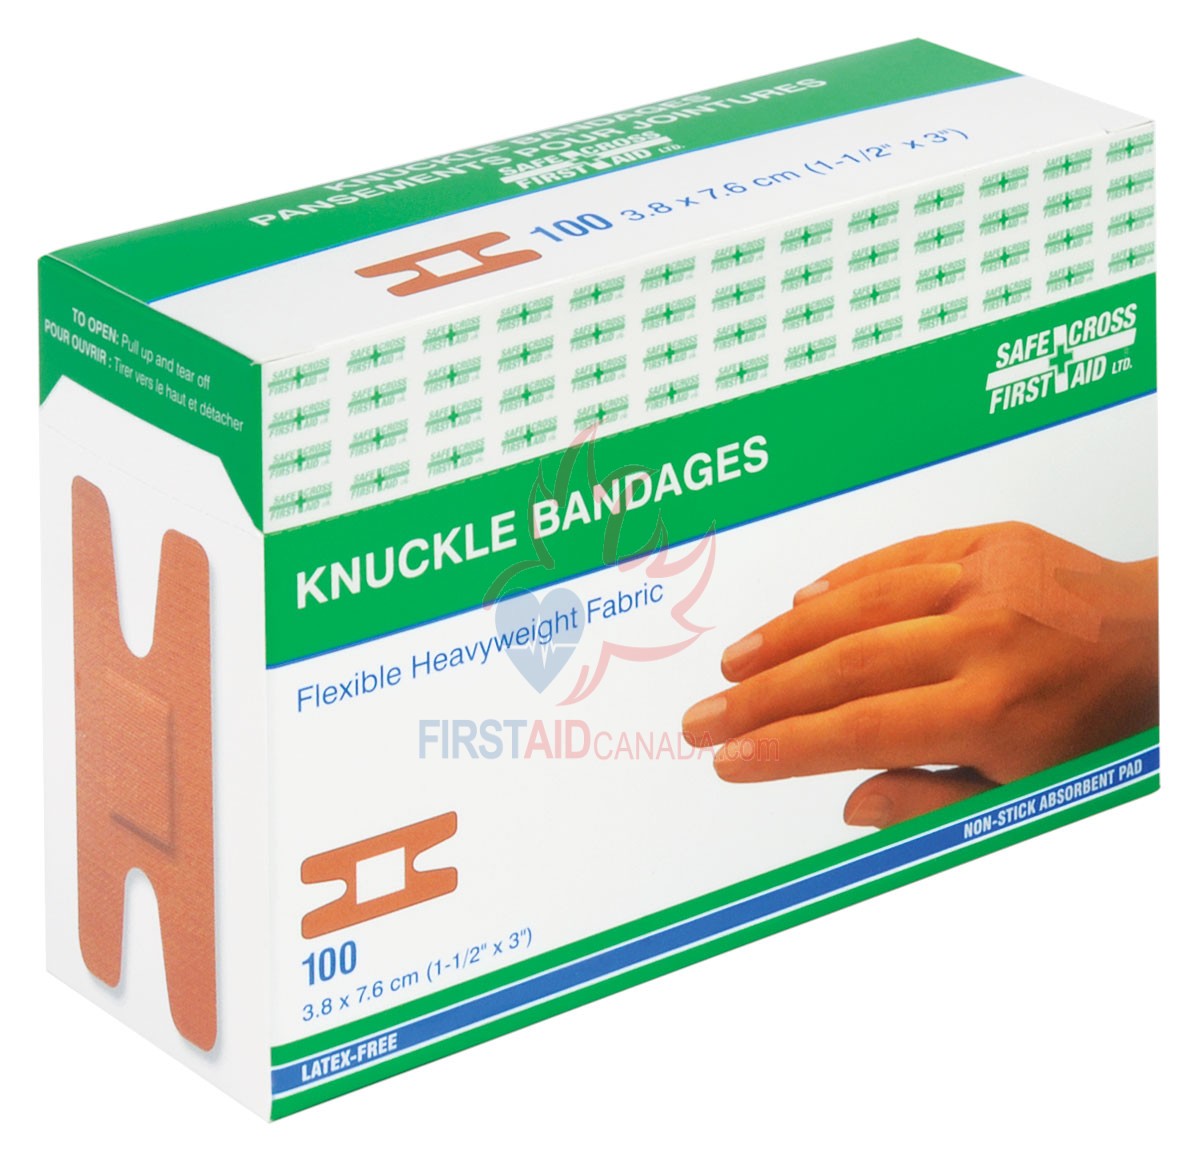 Knuckle Bandages